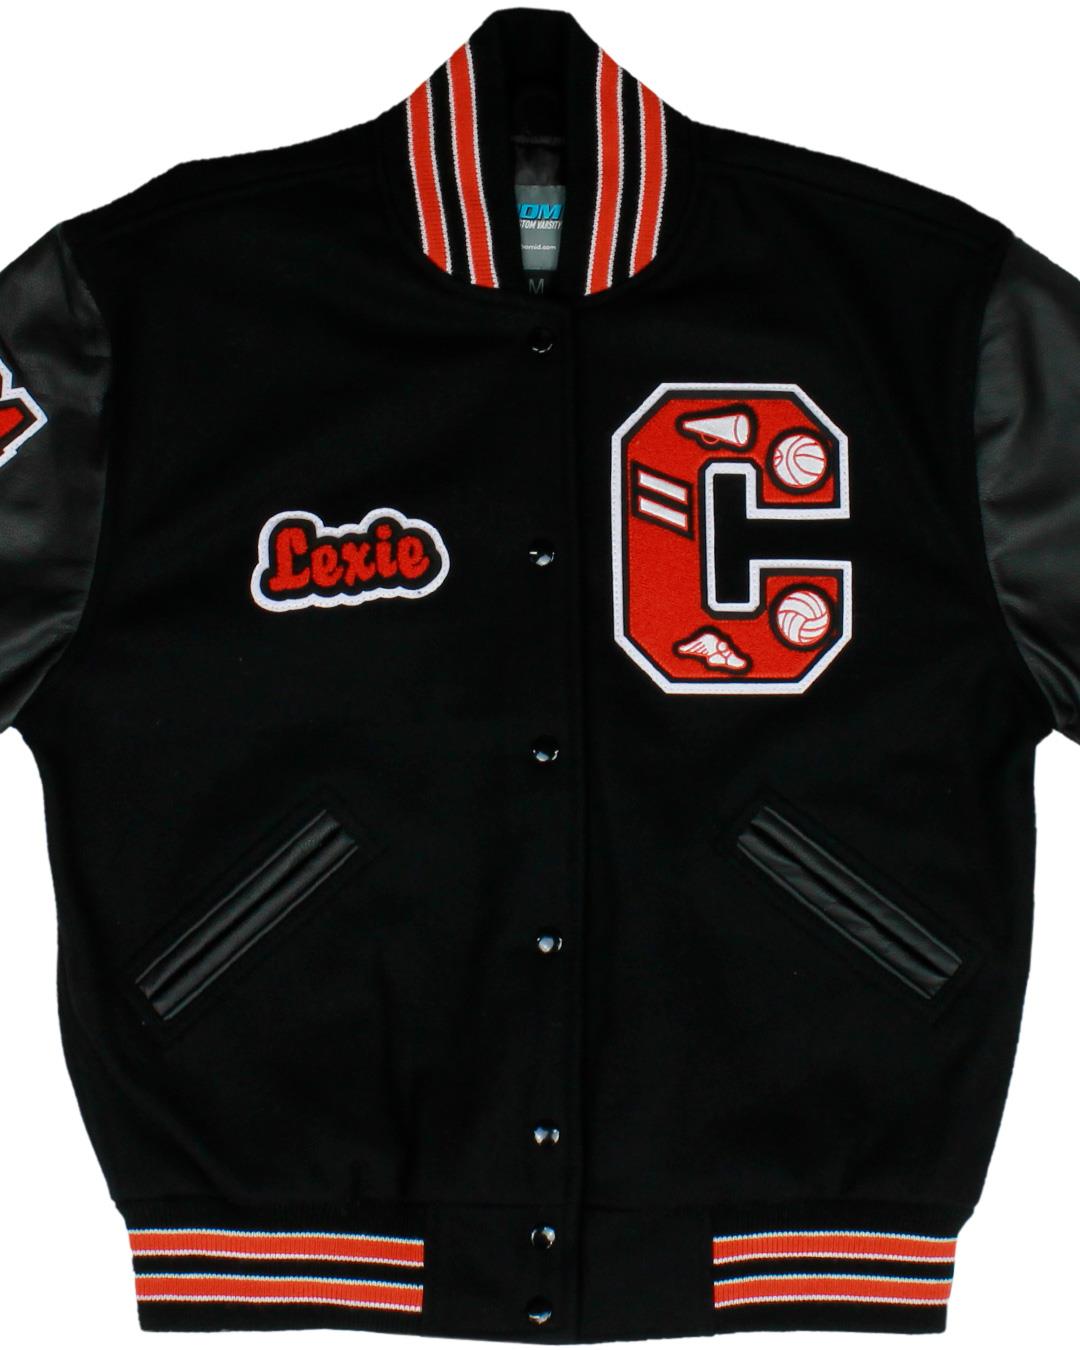 Coweta High School Letter Jacket, Coweta OK - Front